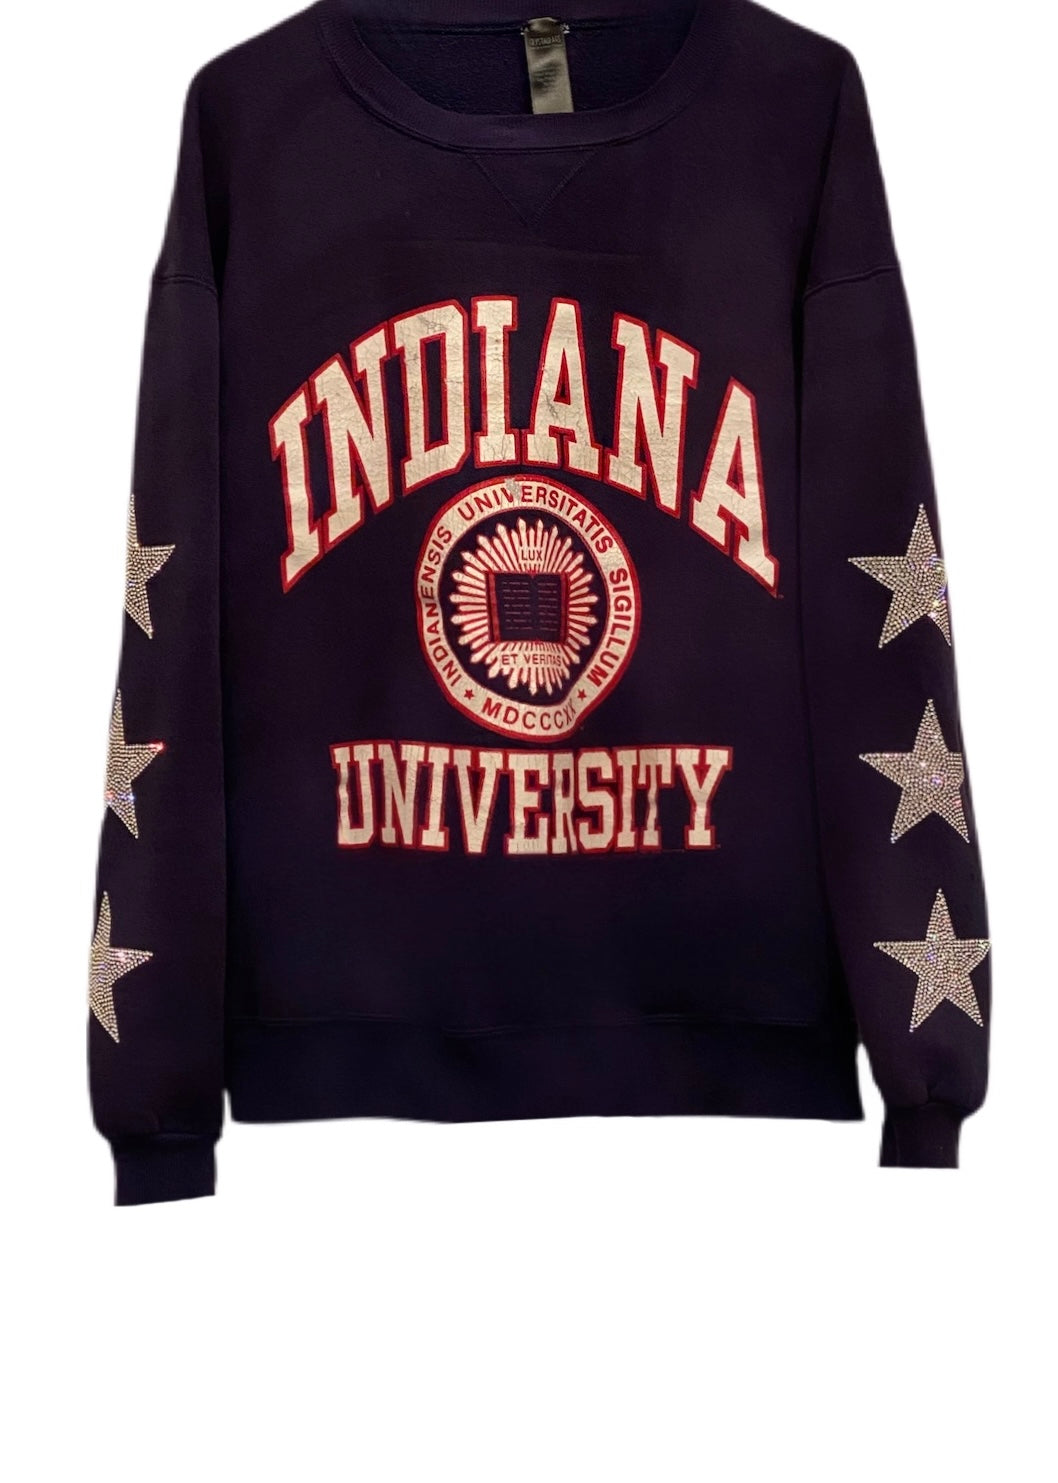 Indiana University, One of a KIND Vintage Sweatshirt with Three Crystal Star Design